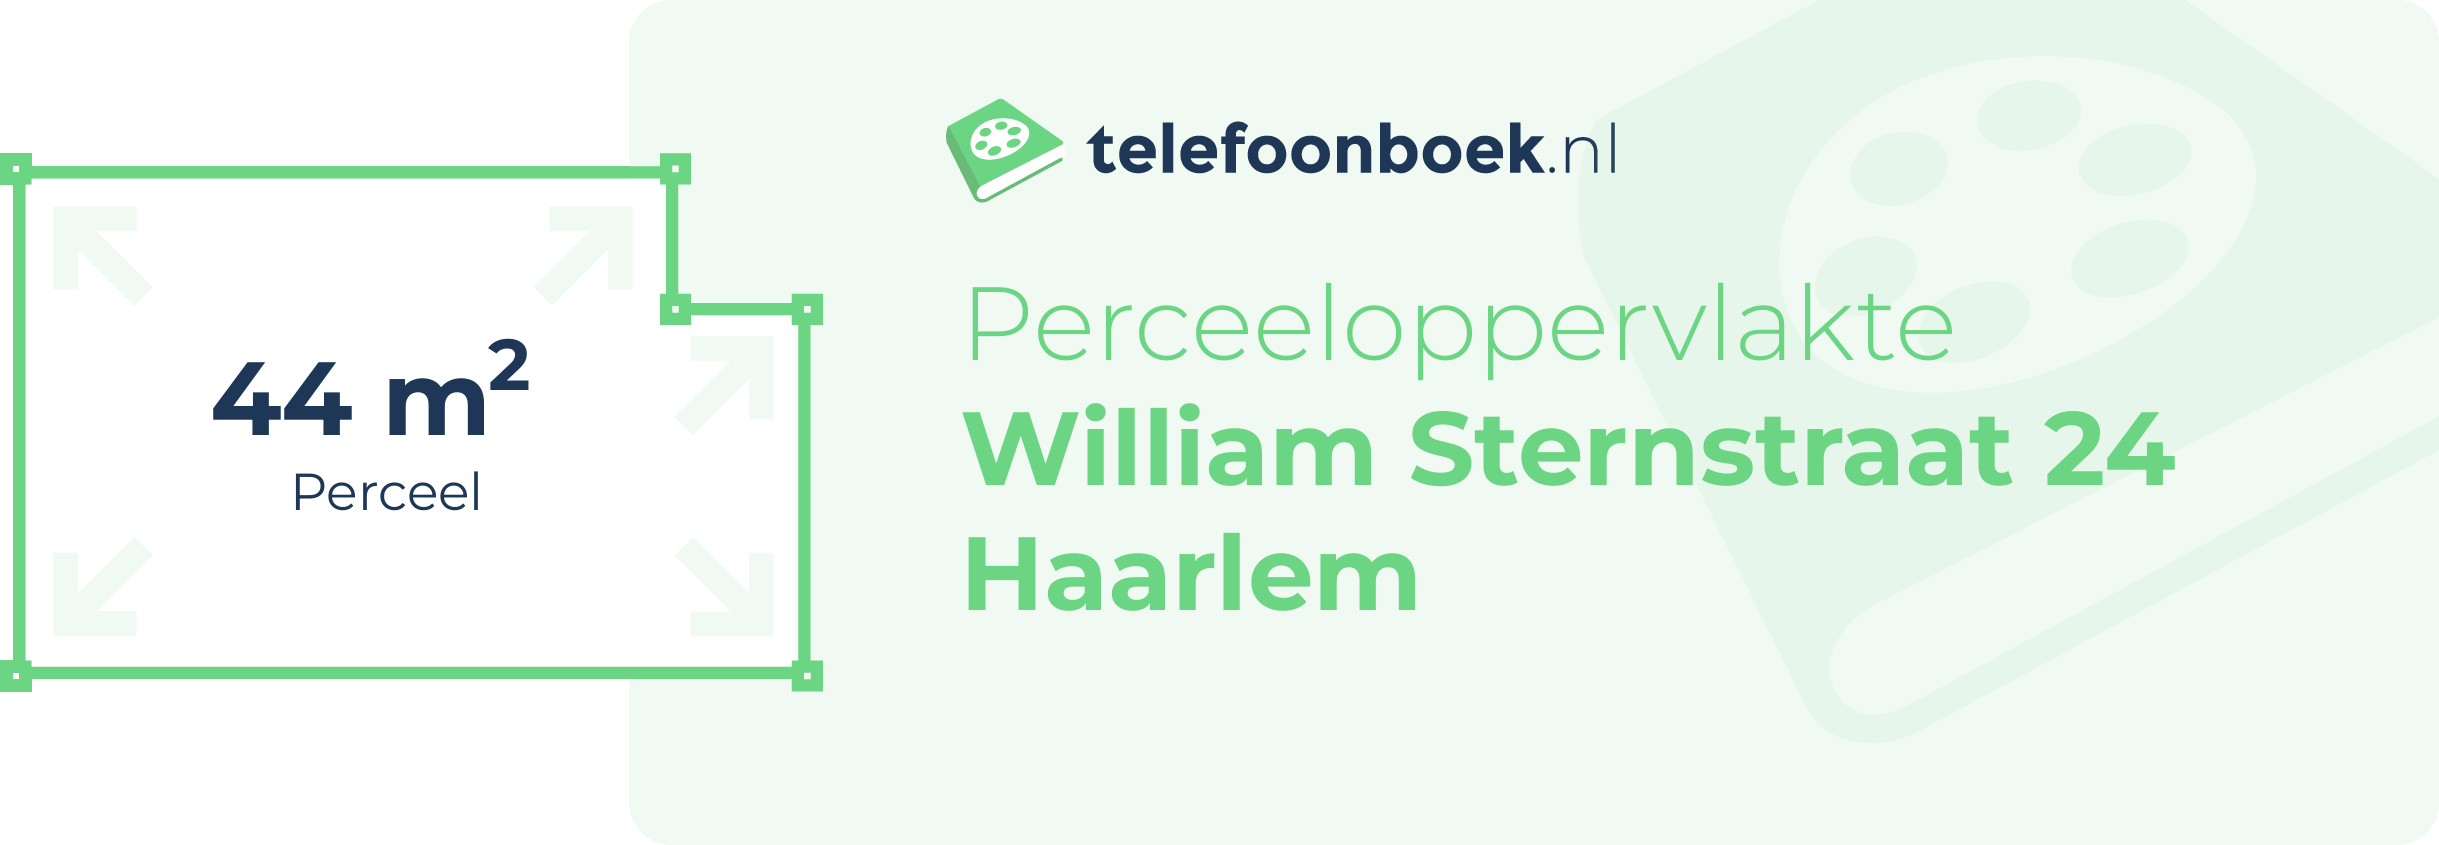 Perceeloppervlakte William Sternstraat 24 Haarlem